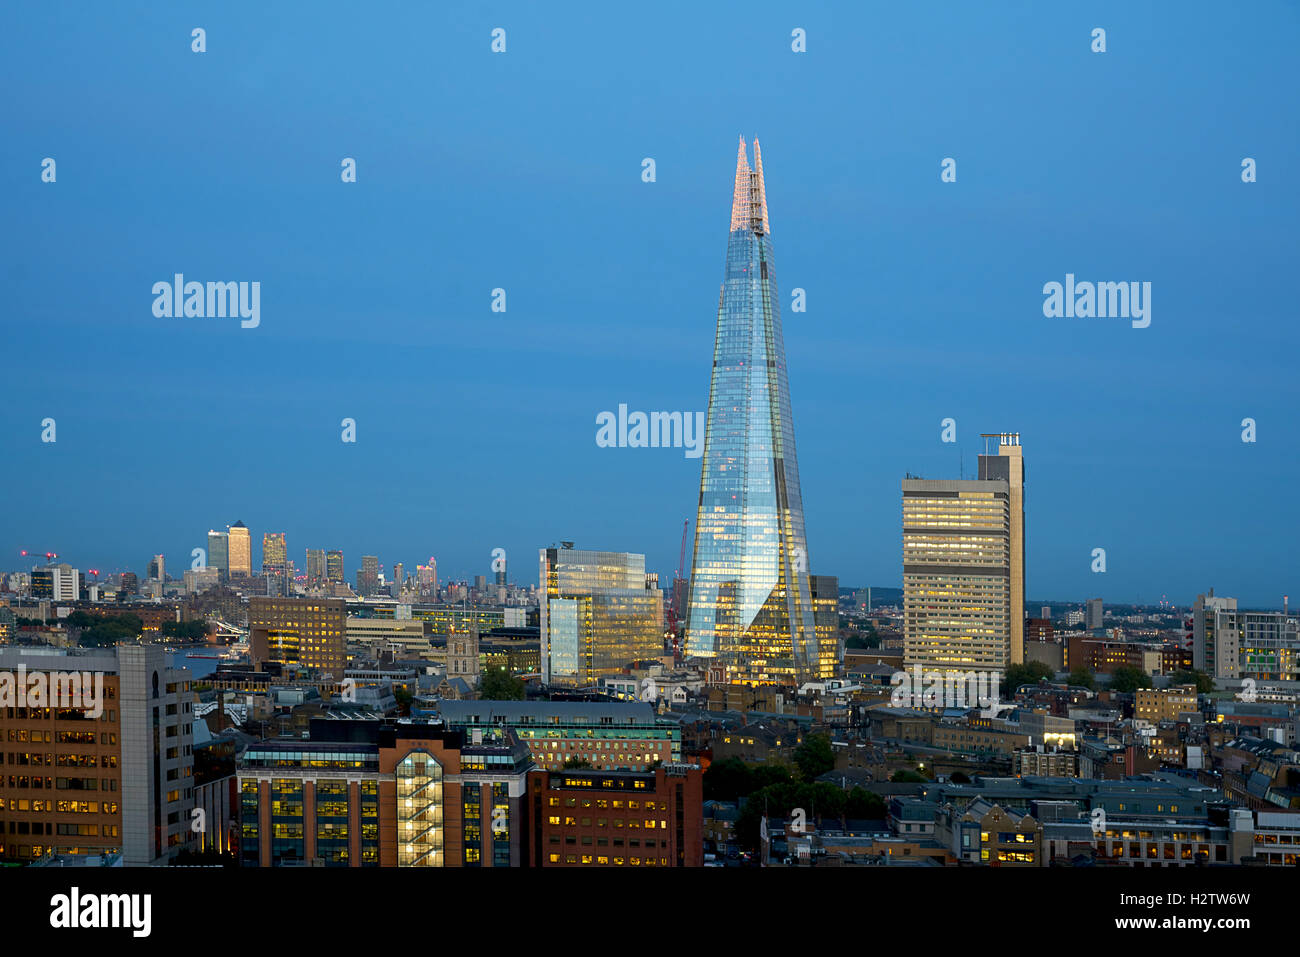 Der Shard London.   Hohes Gebäude in London. Stockfoto